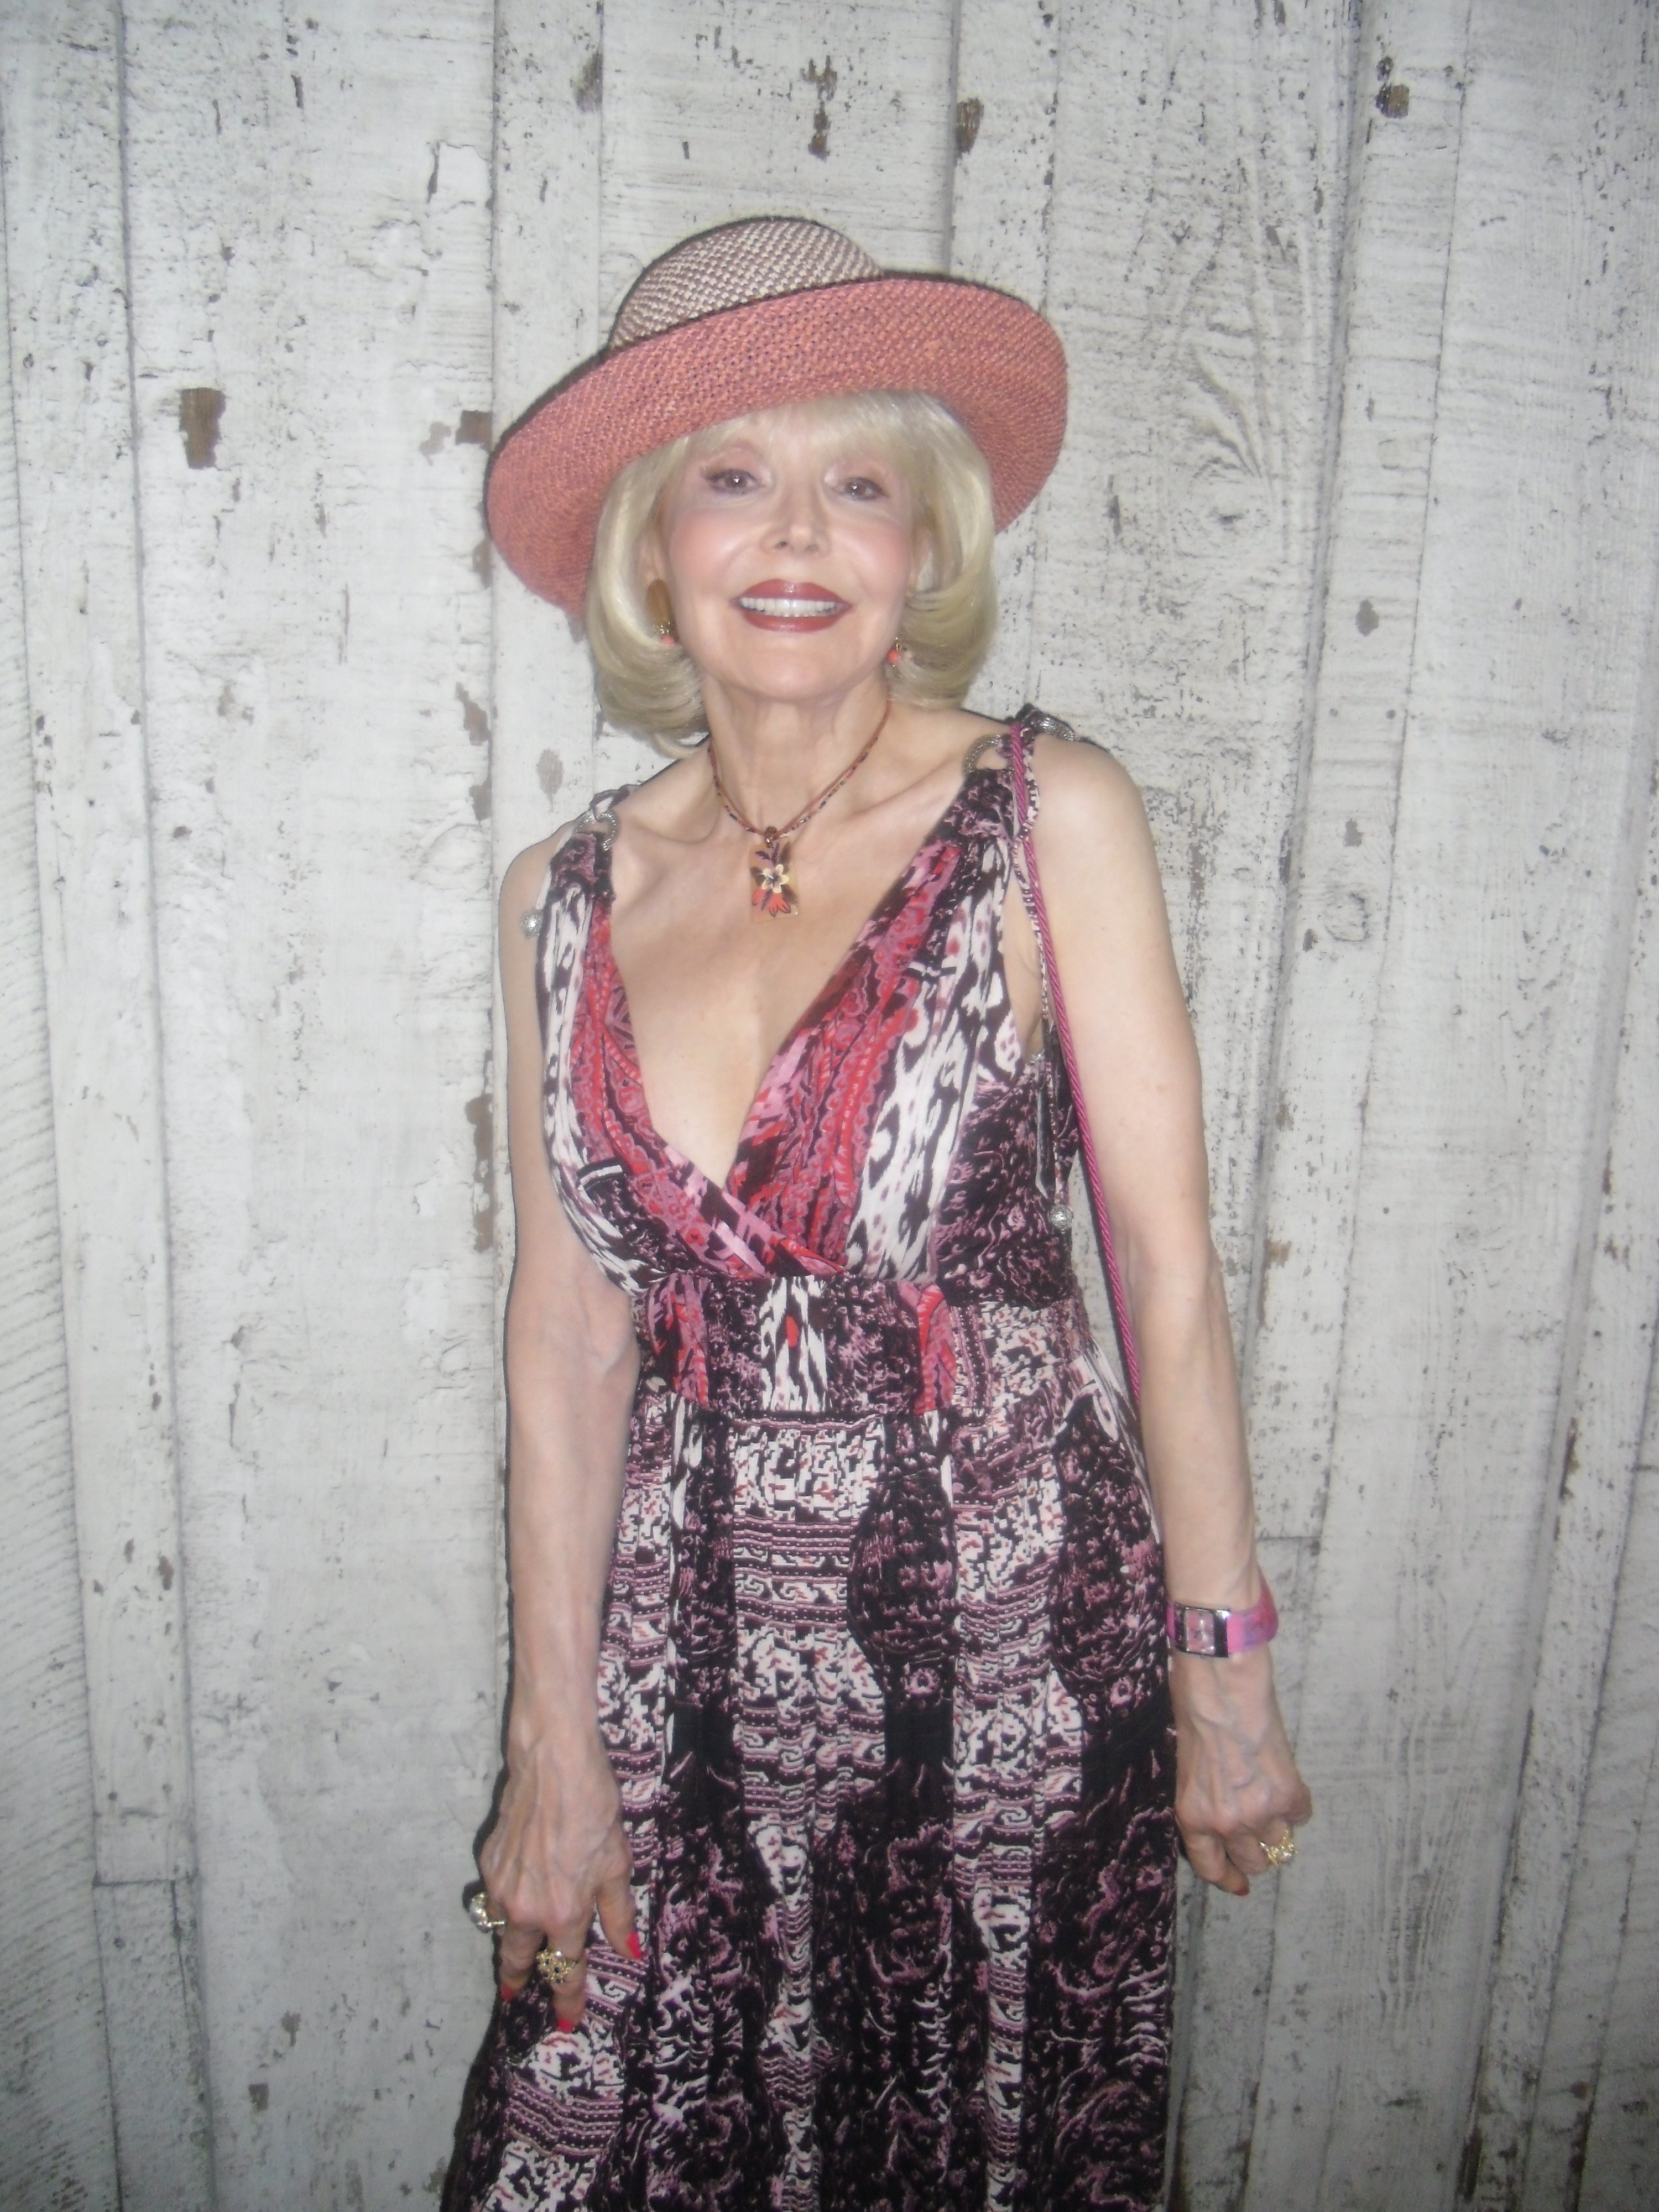 Francine York attending a Hollywood event June 2014.